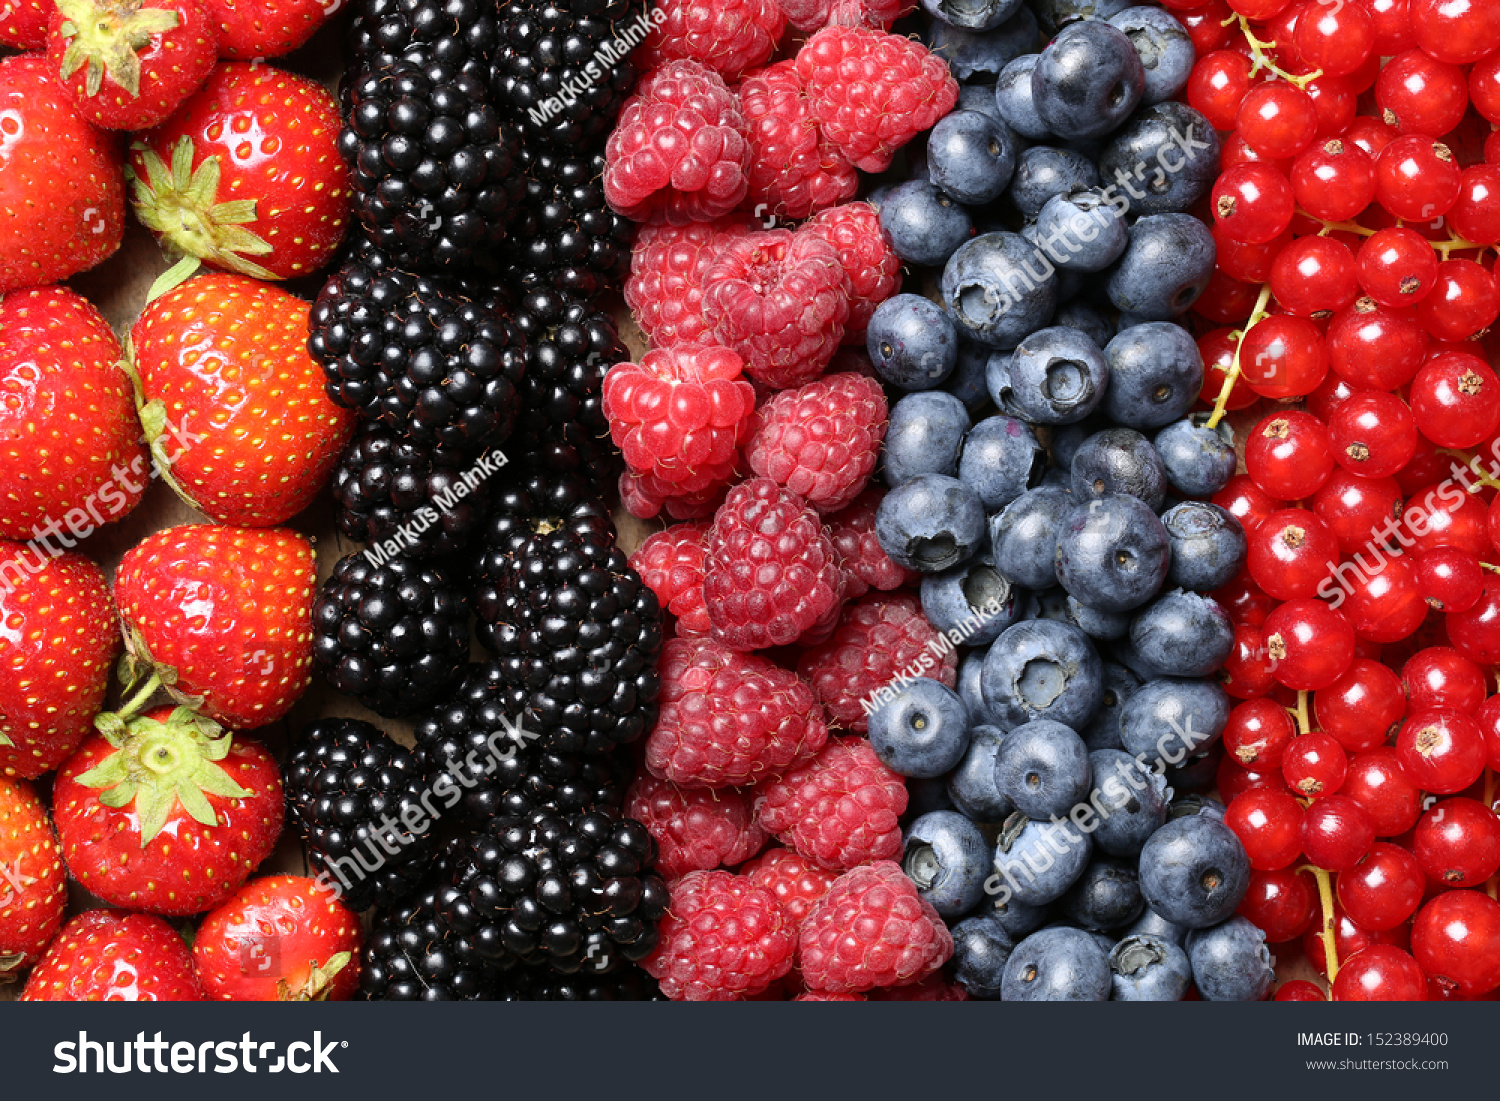 stock-photo-berry-fruits-like-strawberri